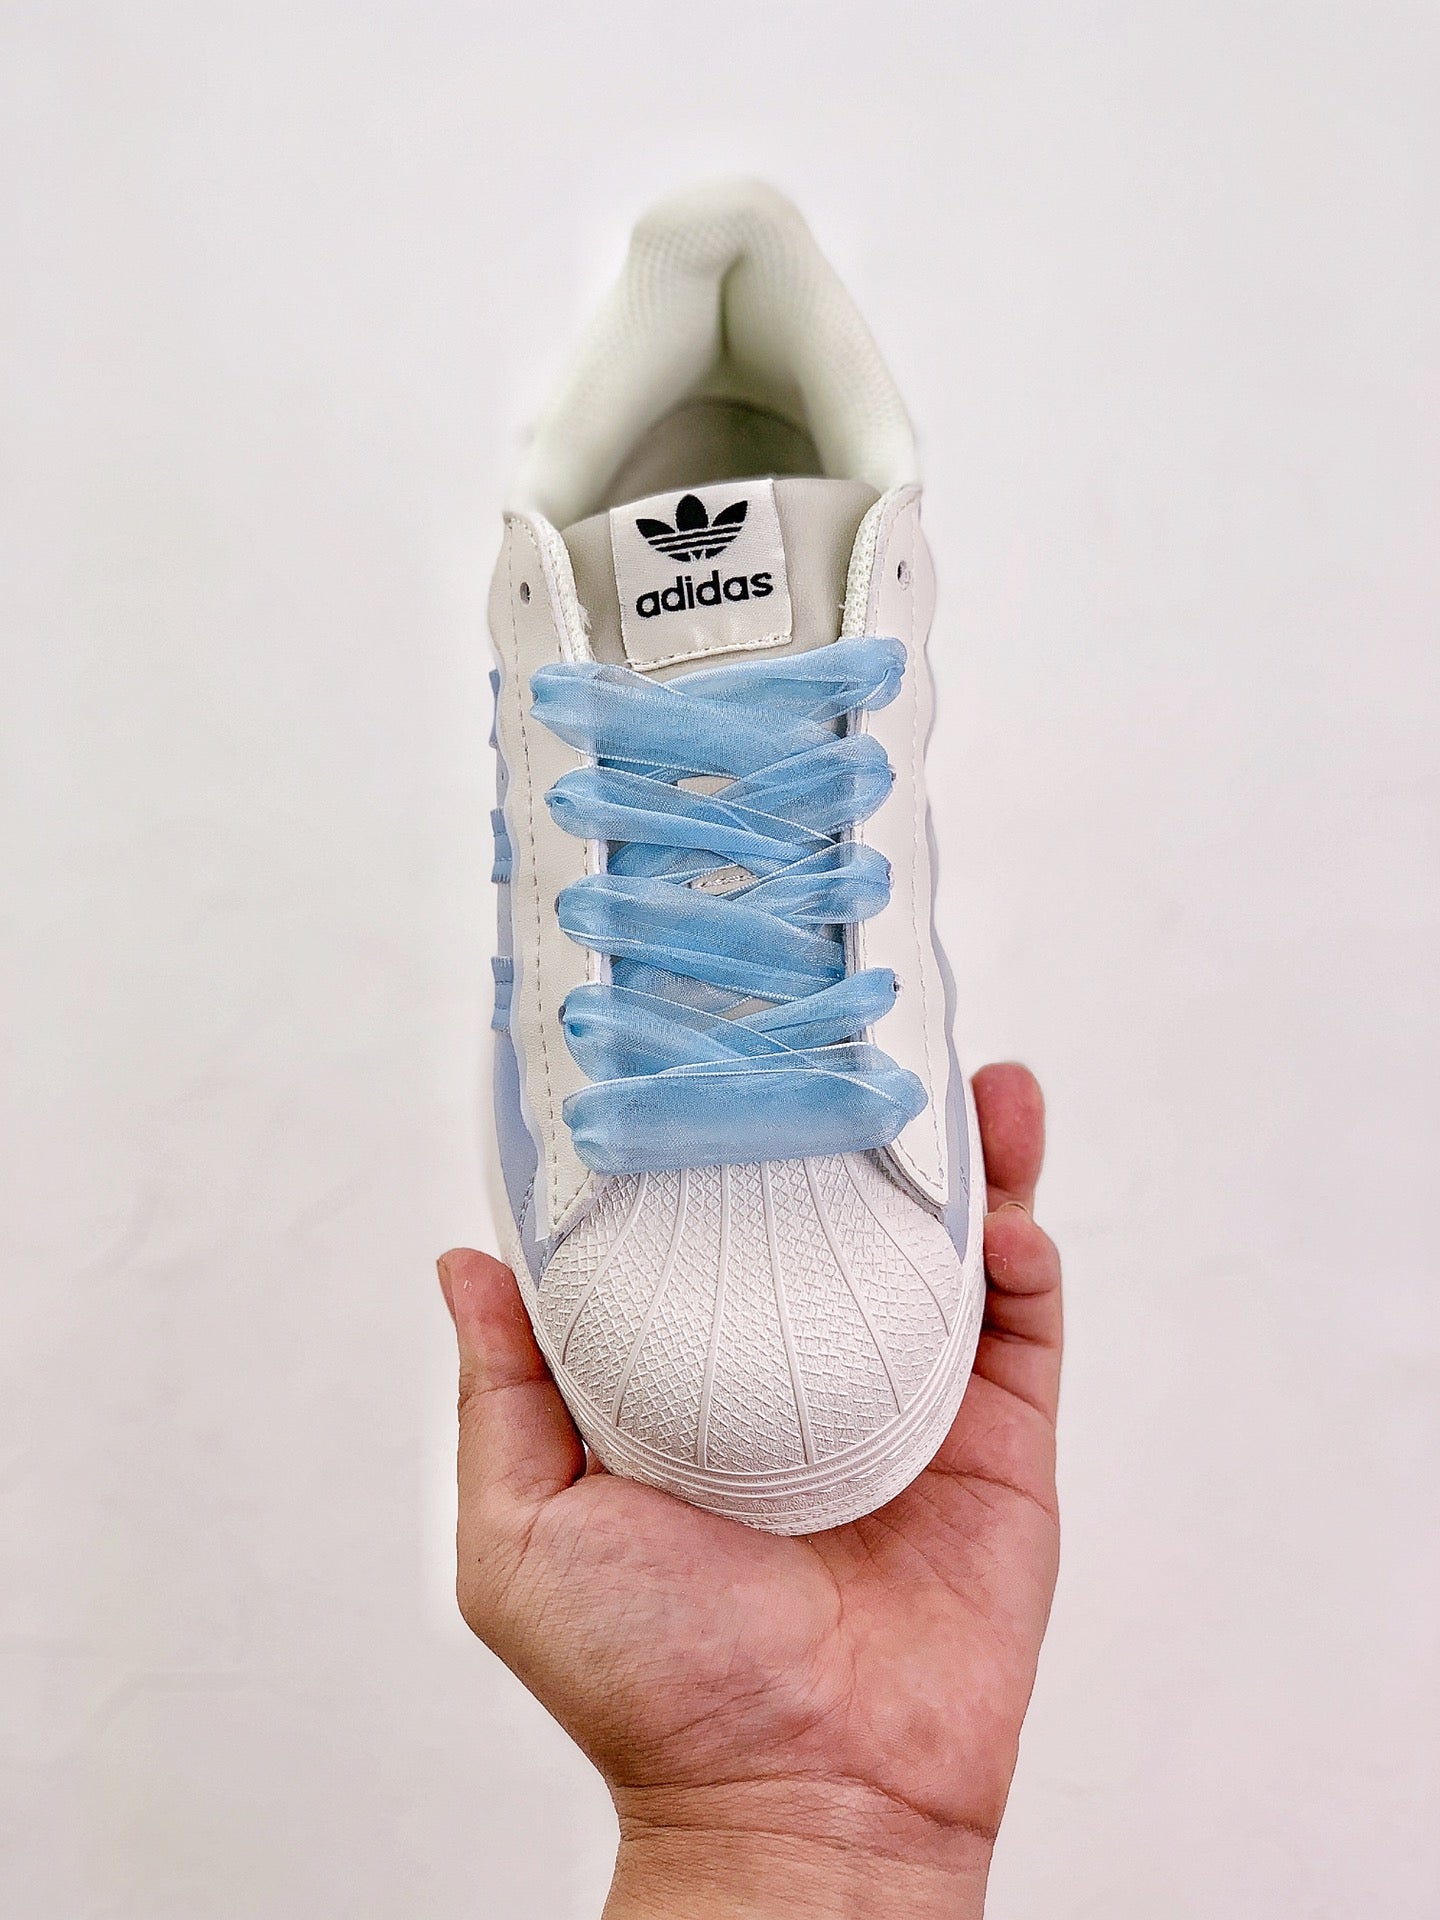 Adidas superstar light blue